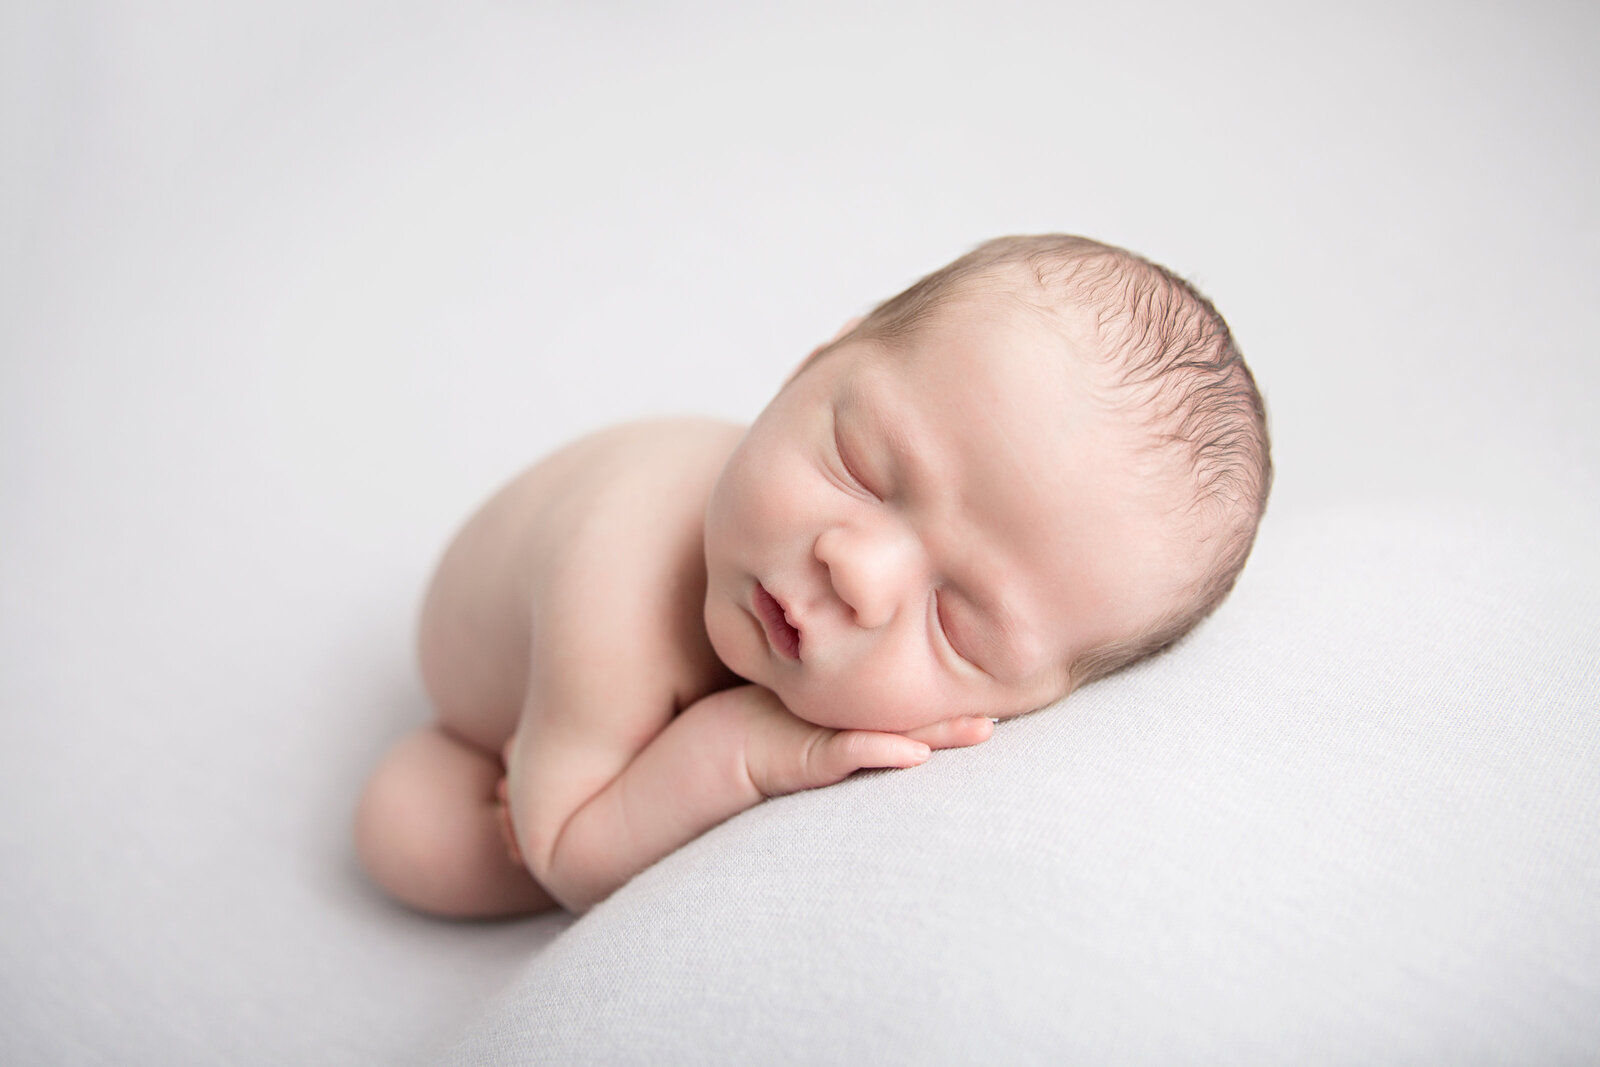 newborn baby laying in womb pose on light grey fabric